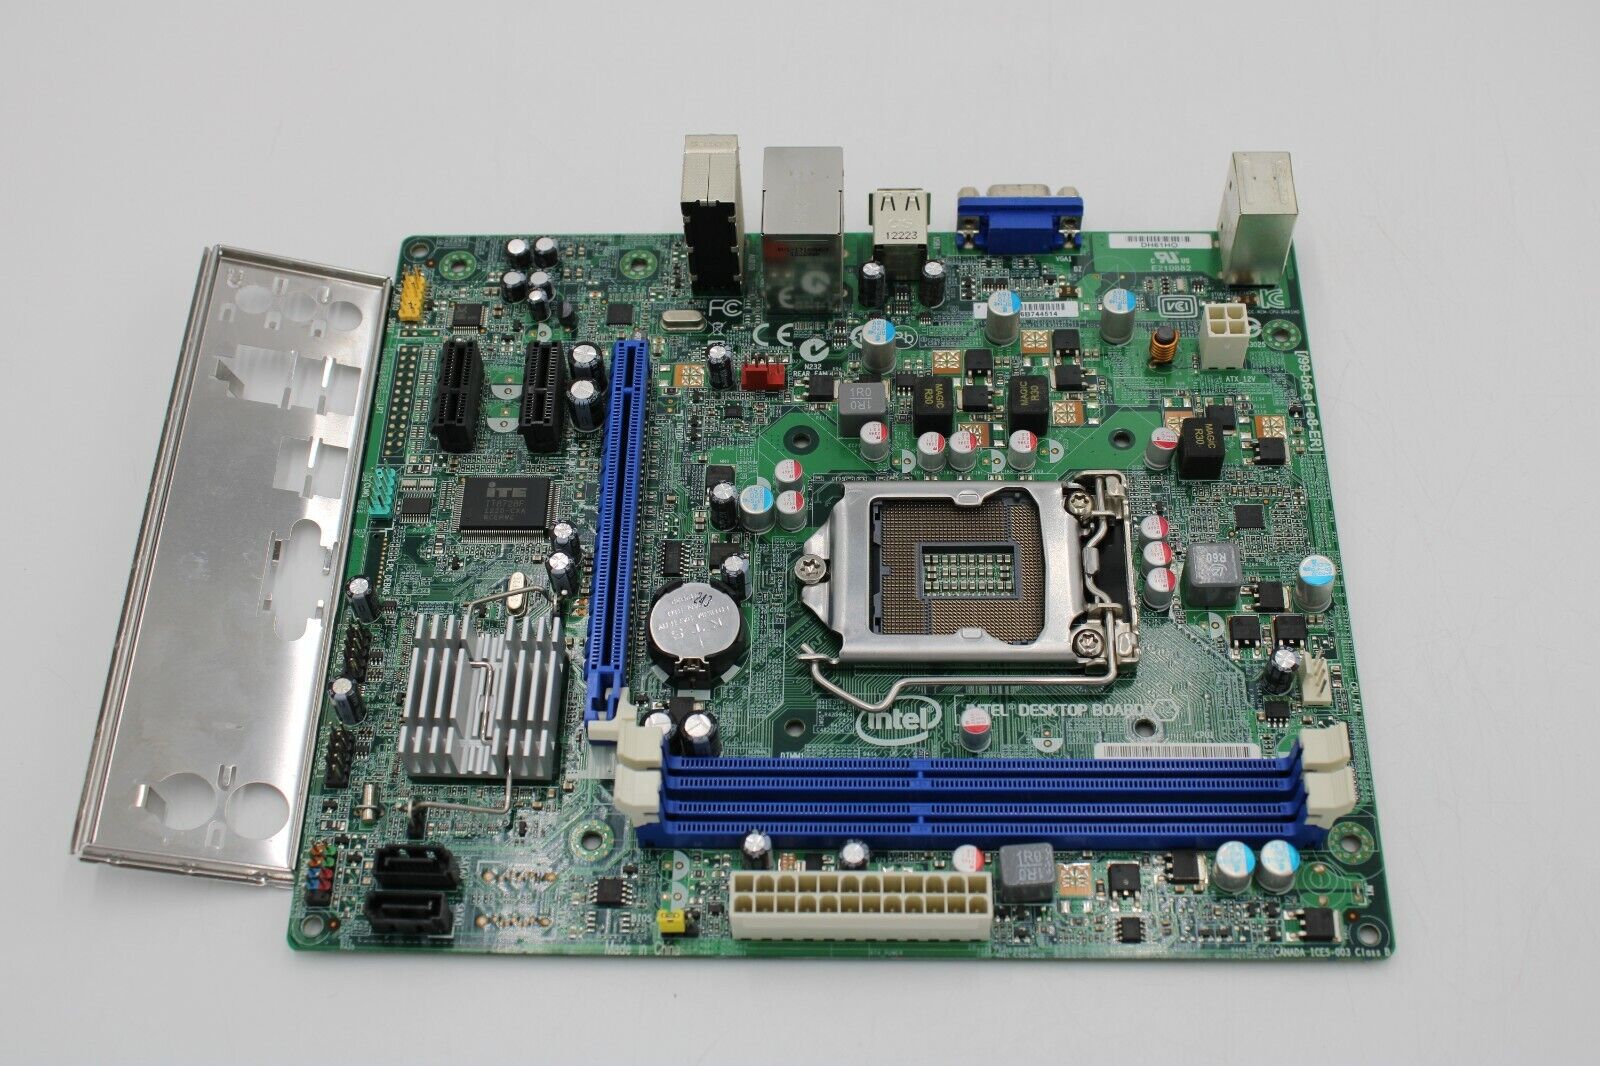 Intel LGA 1155 DDR3 Desktop Motherboard DH61HO w/ I/O Shield